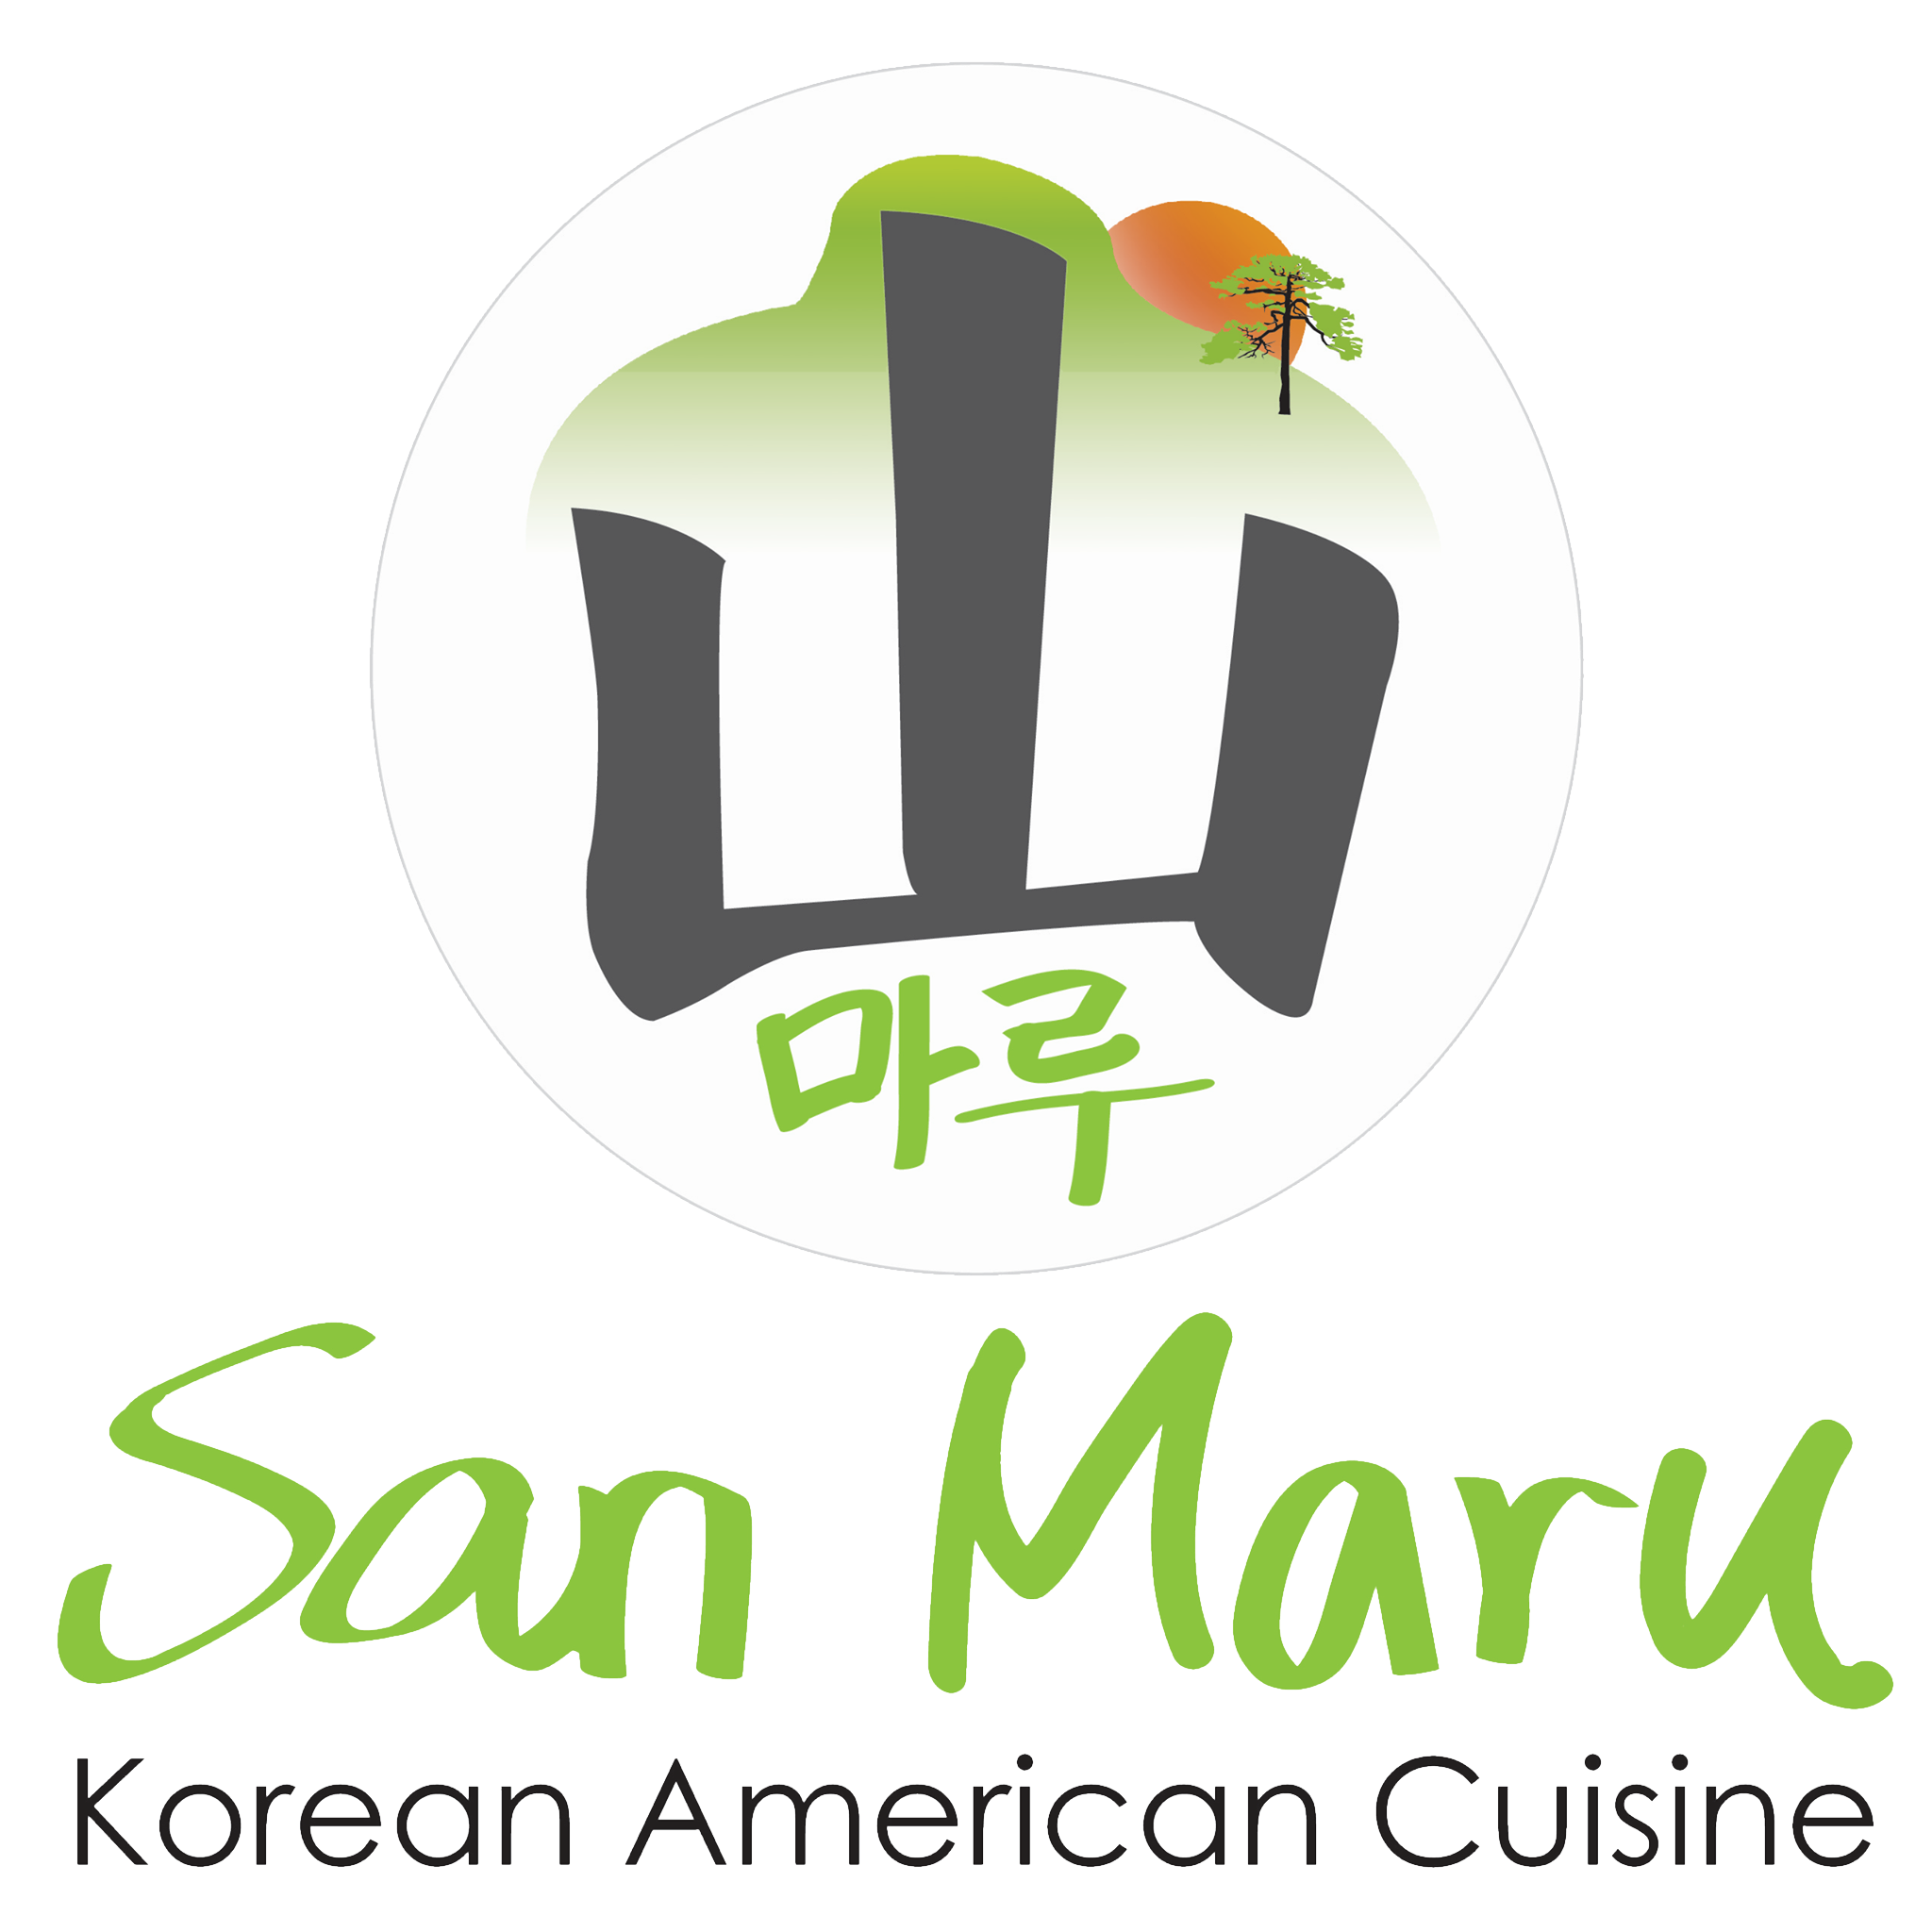 San Maru logo